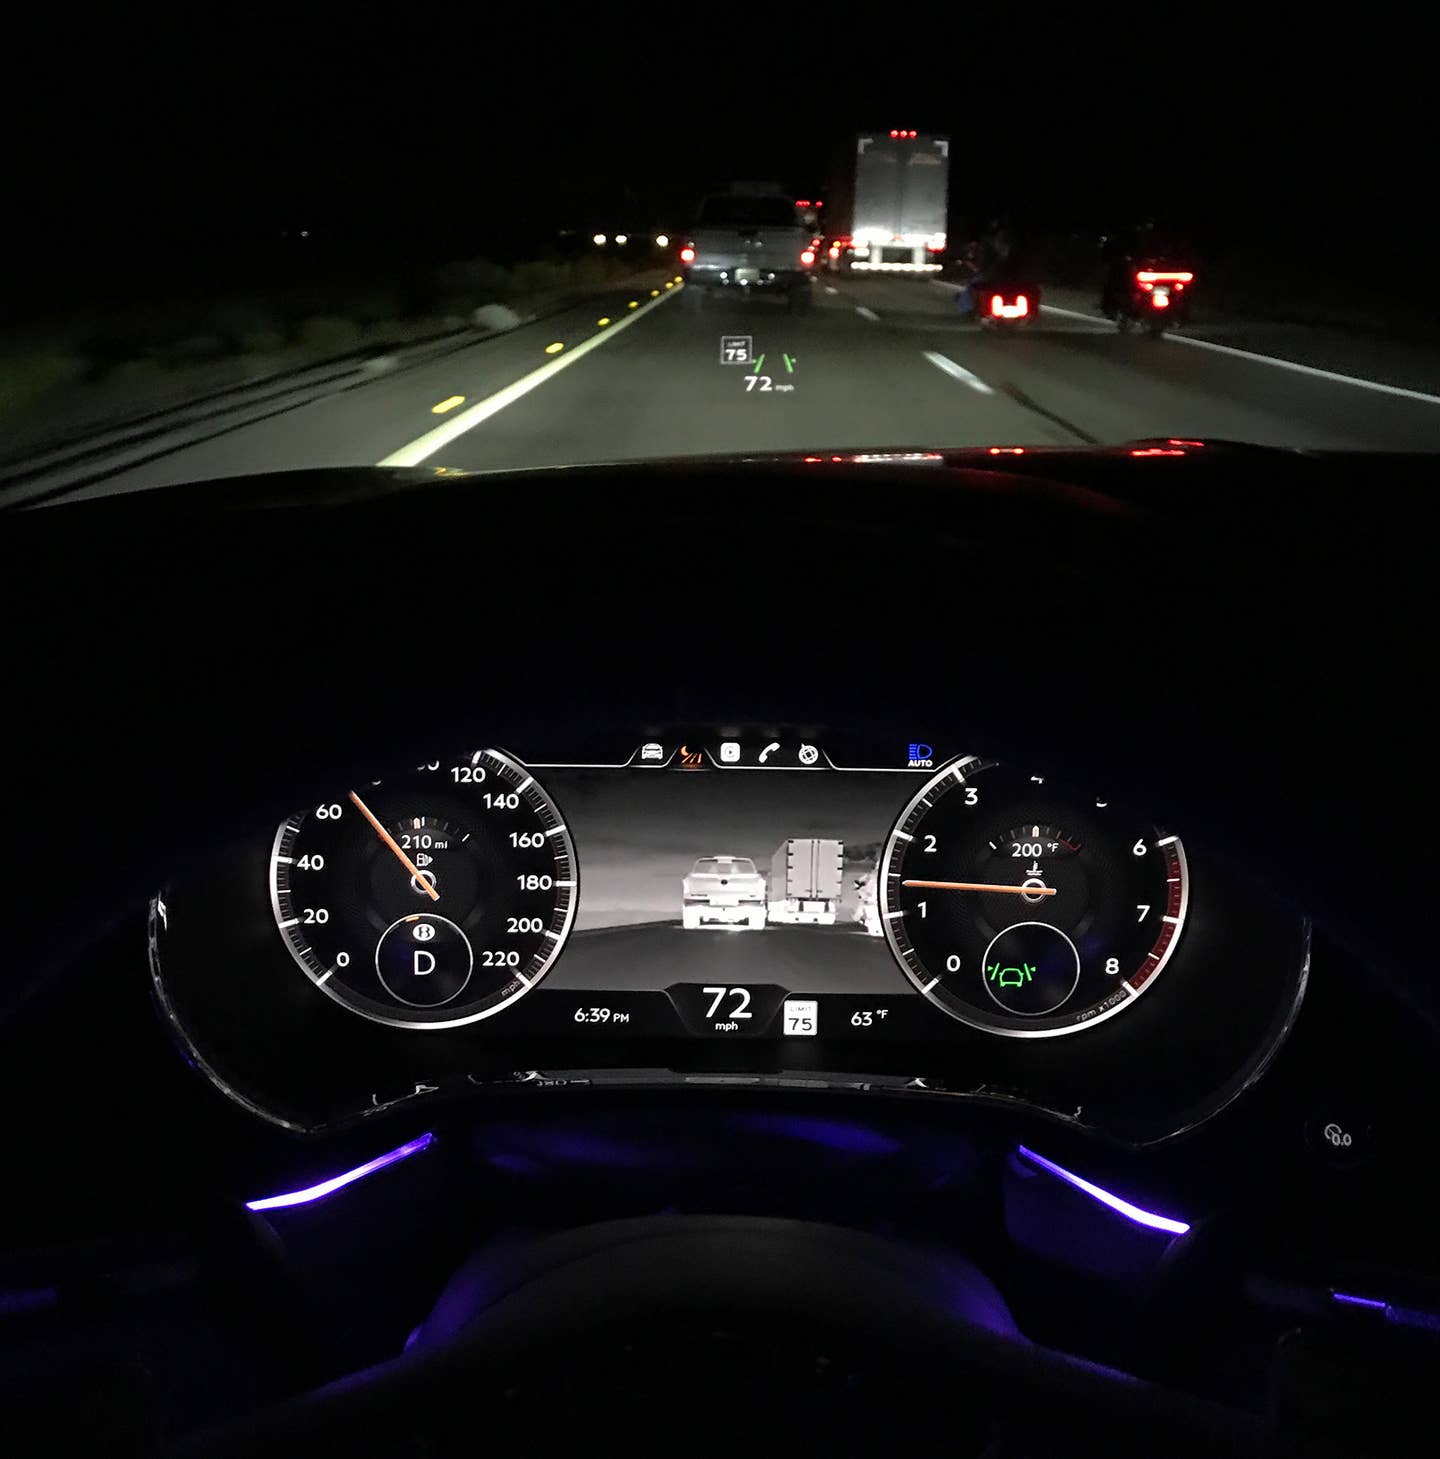 Bentley Continental GT arizona desert self driving cars